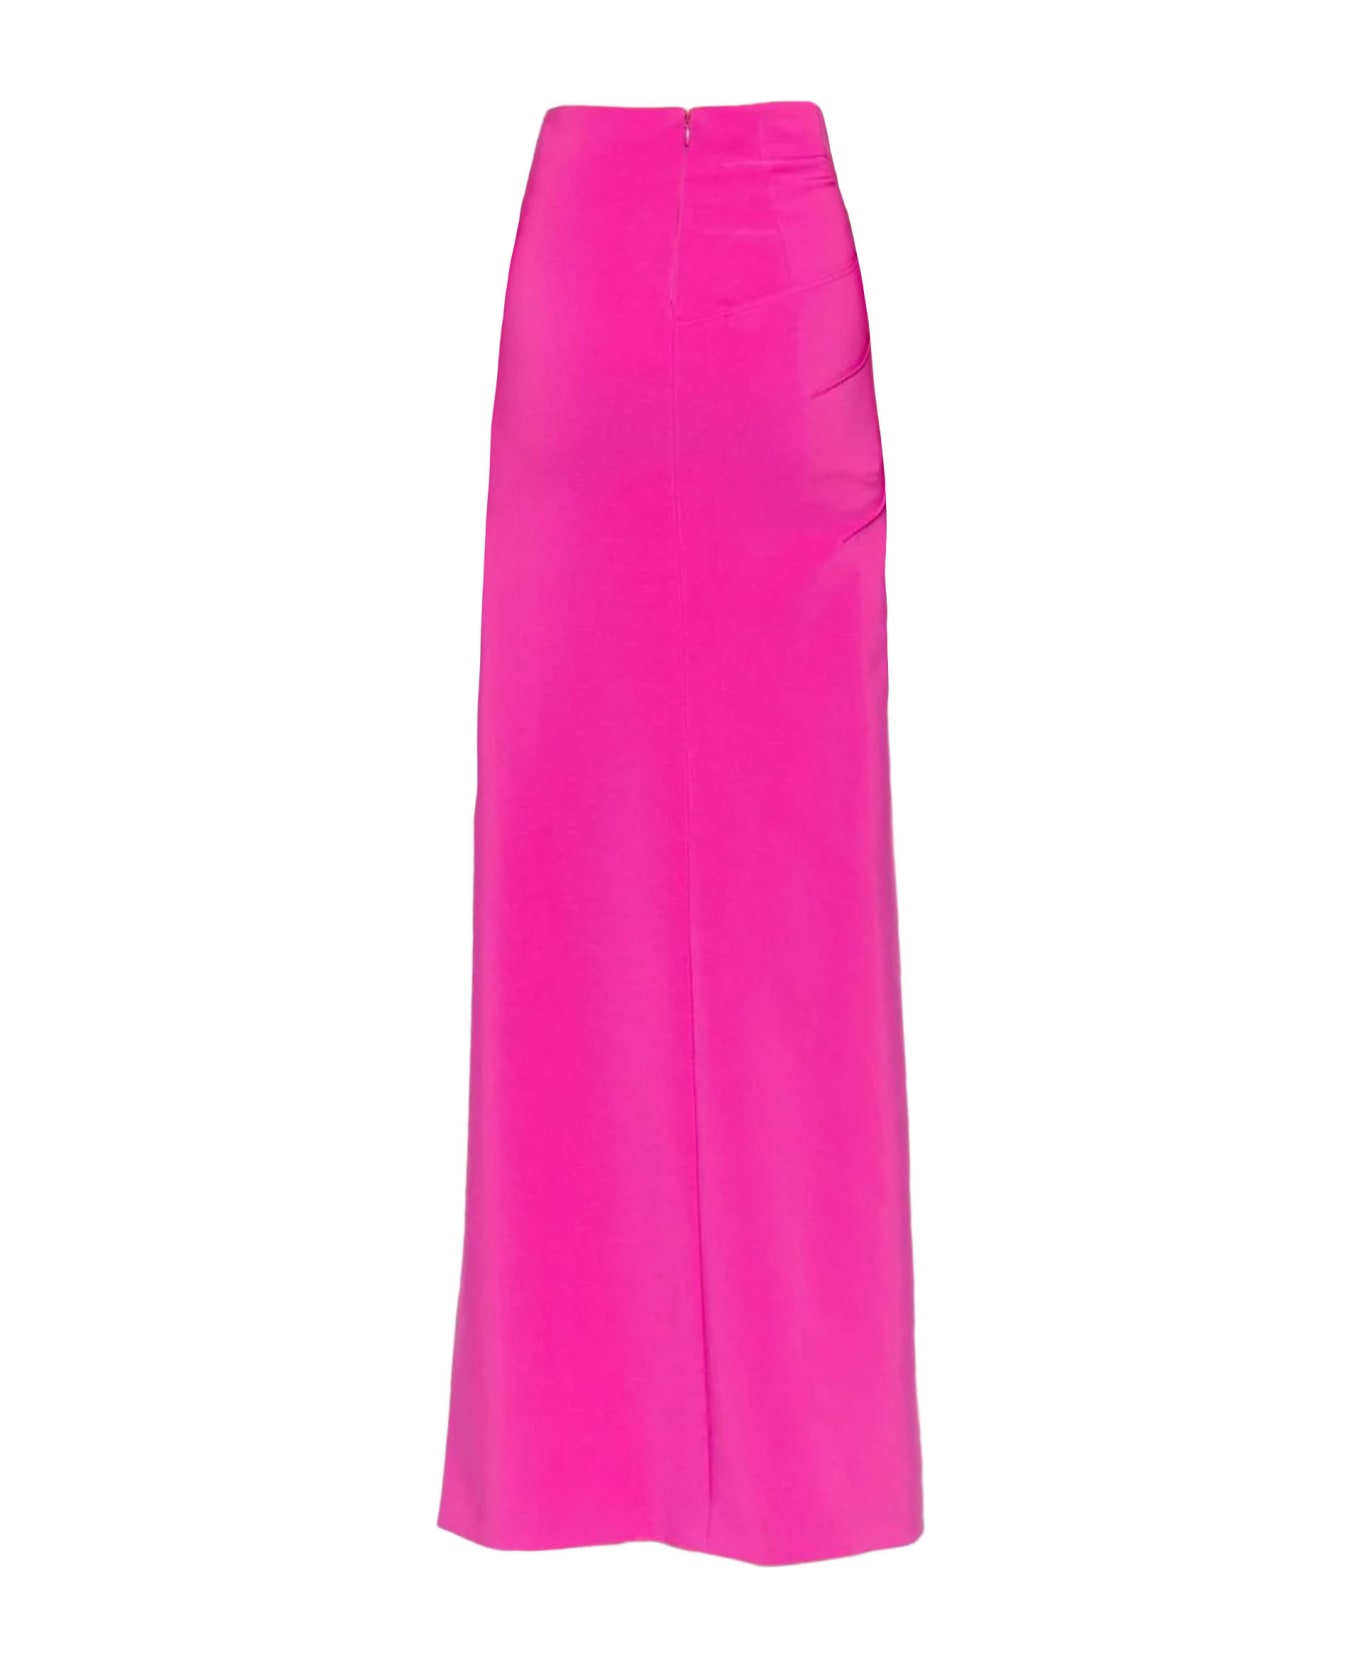 Genny Skirts Pink スカート